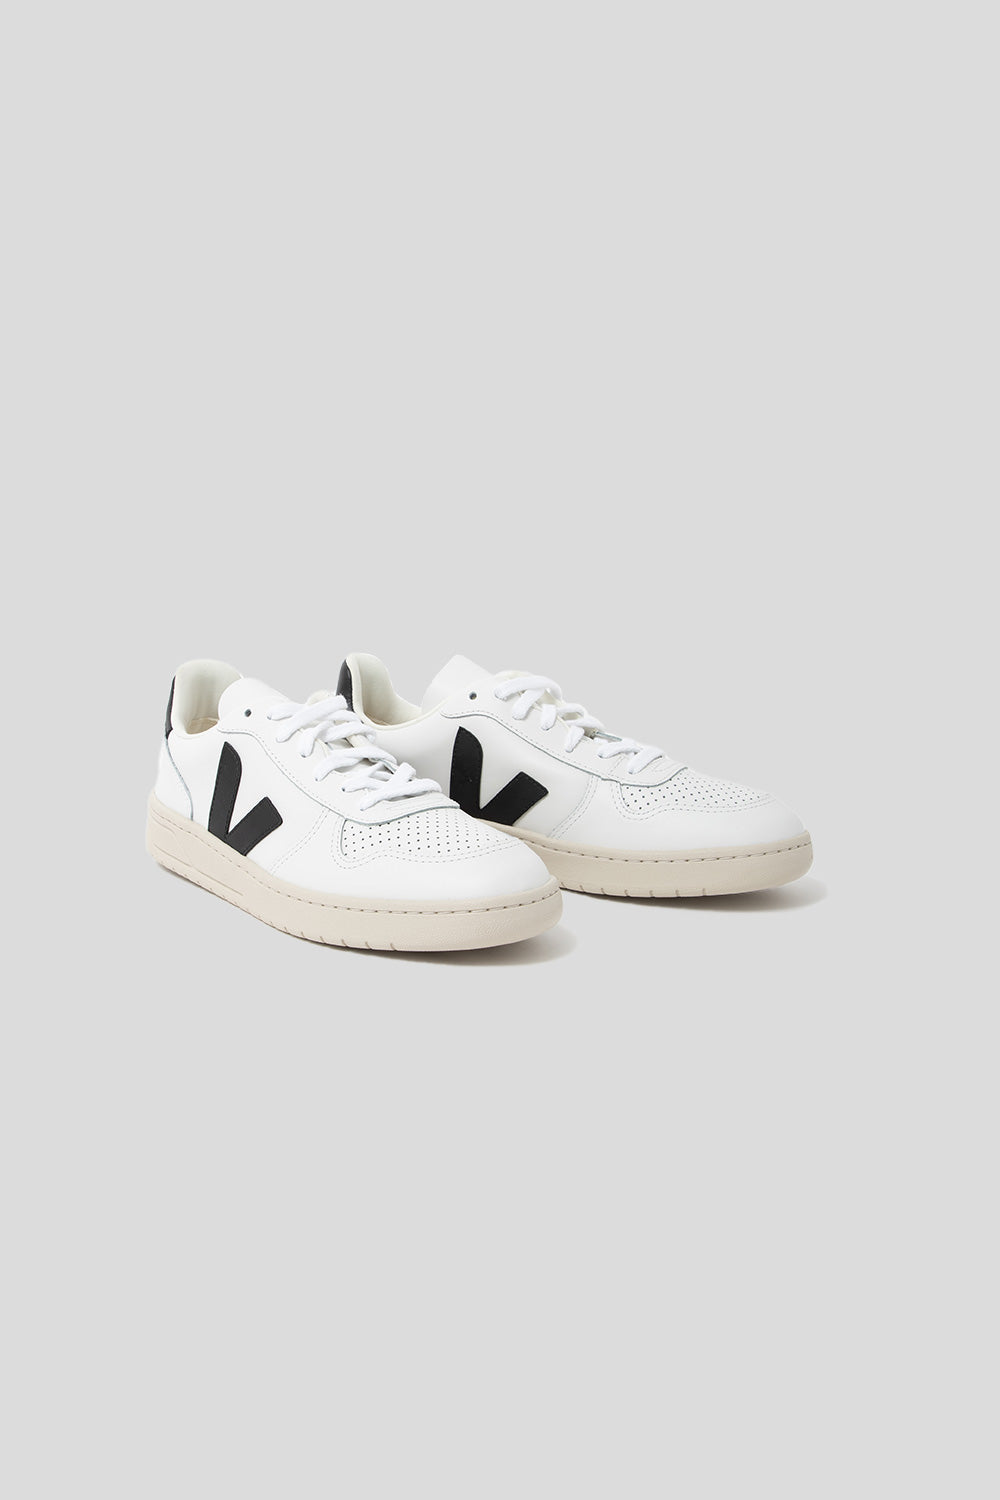 Veja V-10 Leather Shoe in Extra White / Black